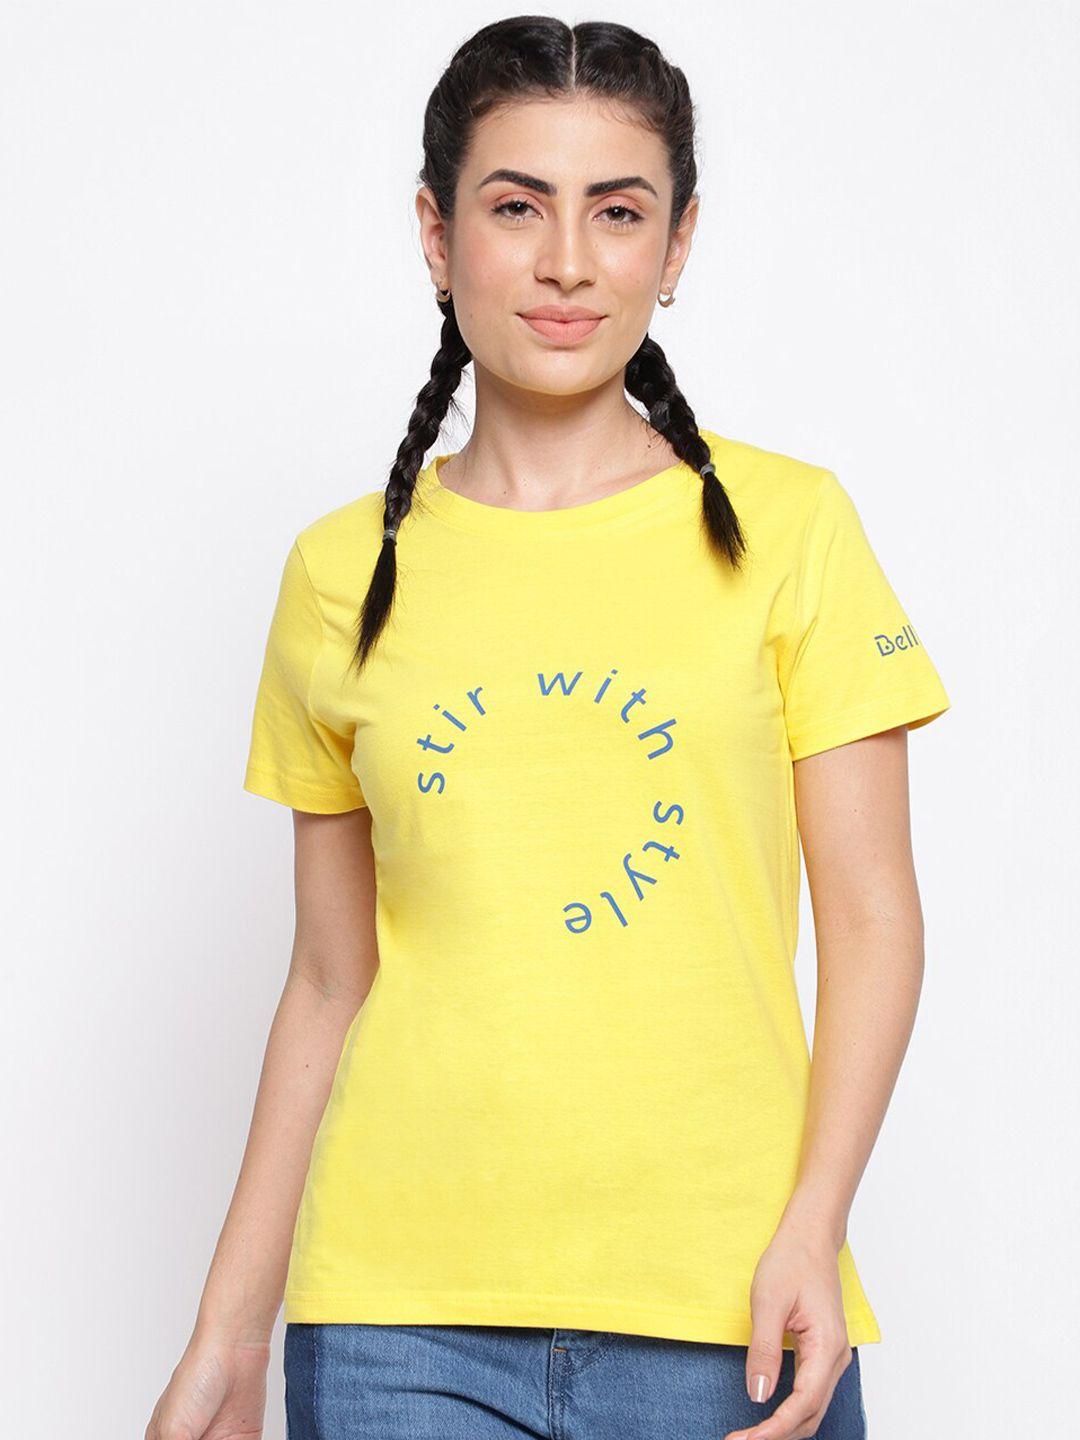 belliskey women typography printed t-shirt